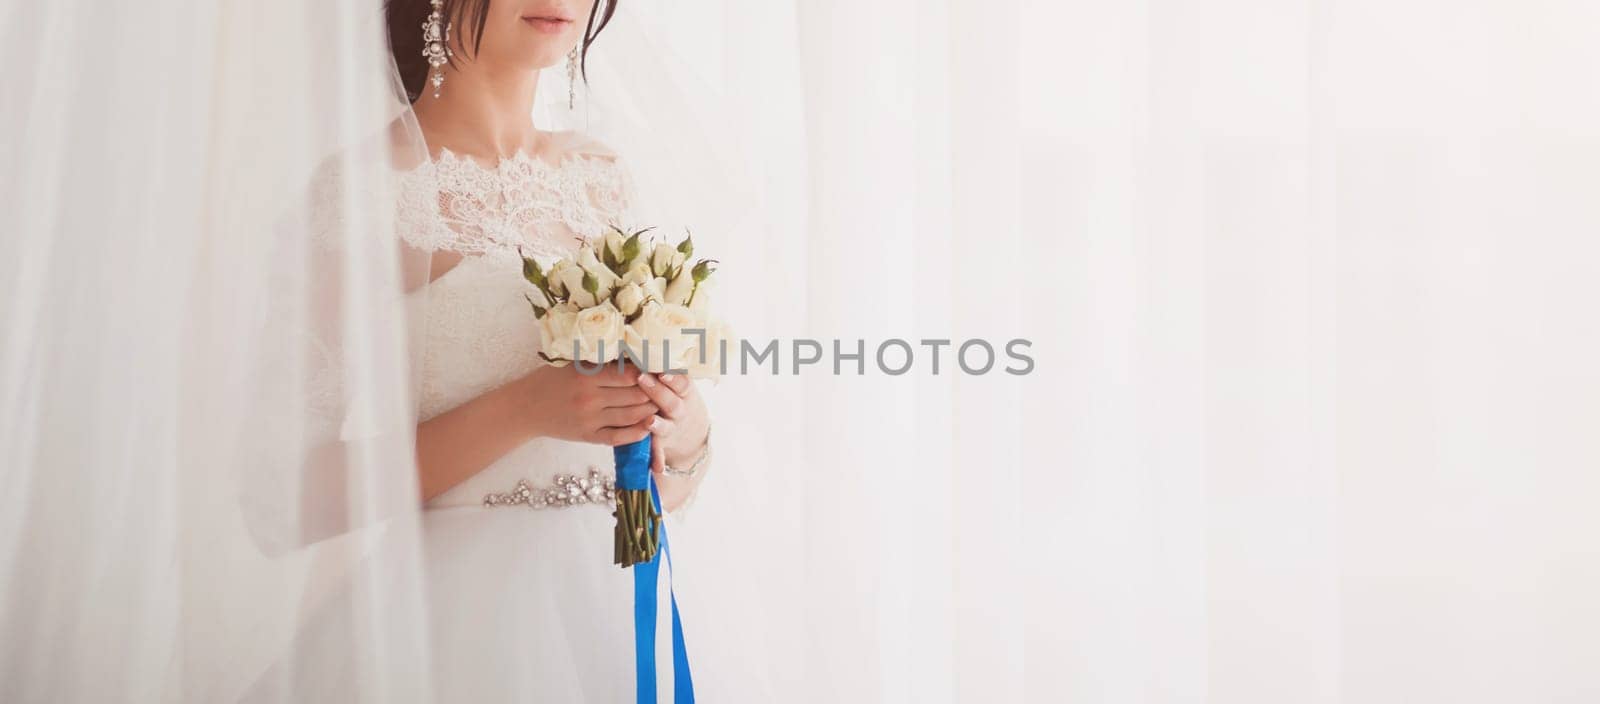 Brides wedding bouquet roses in women's hands. copy space